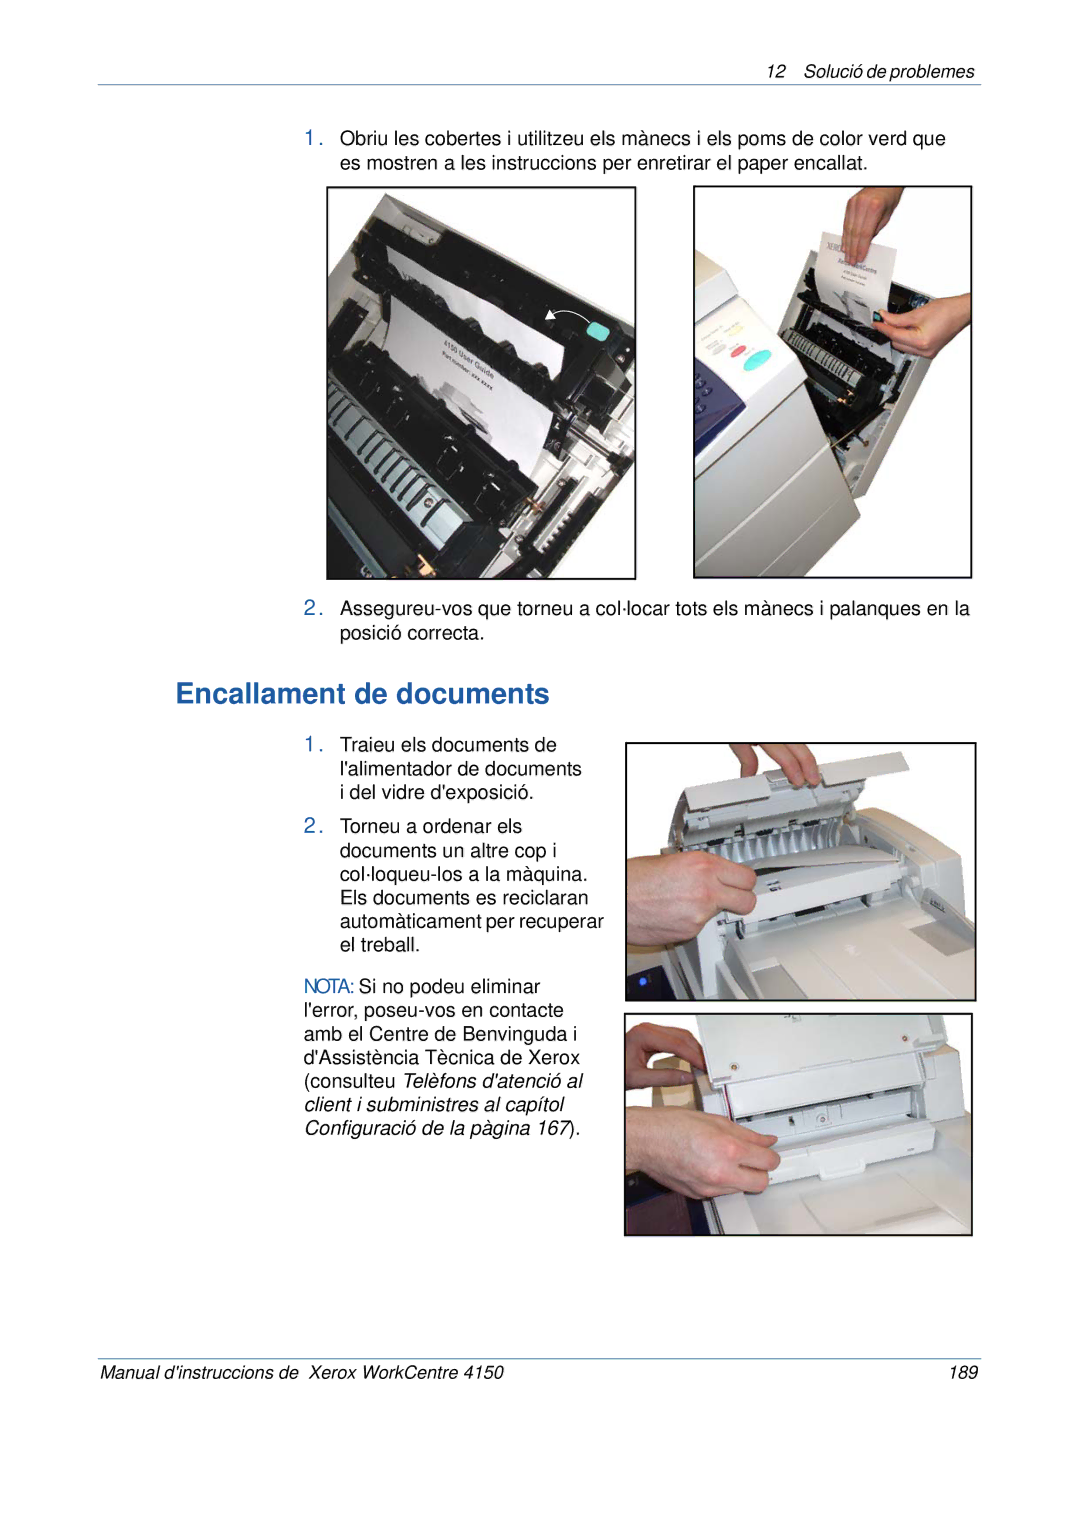 Xerox 5.0 24.03.06 manual Encallament de documents 